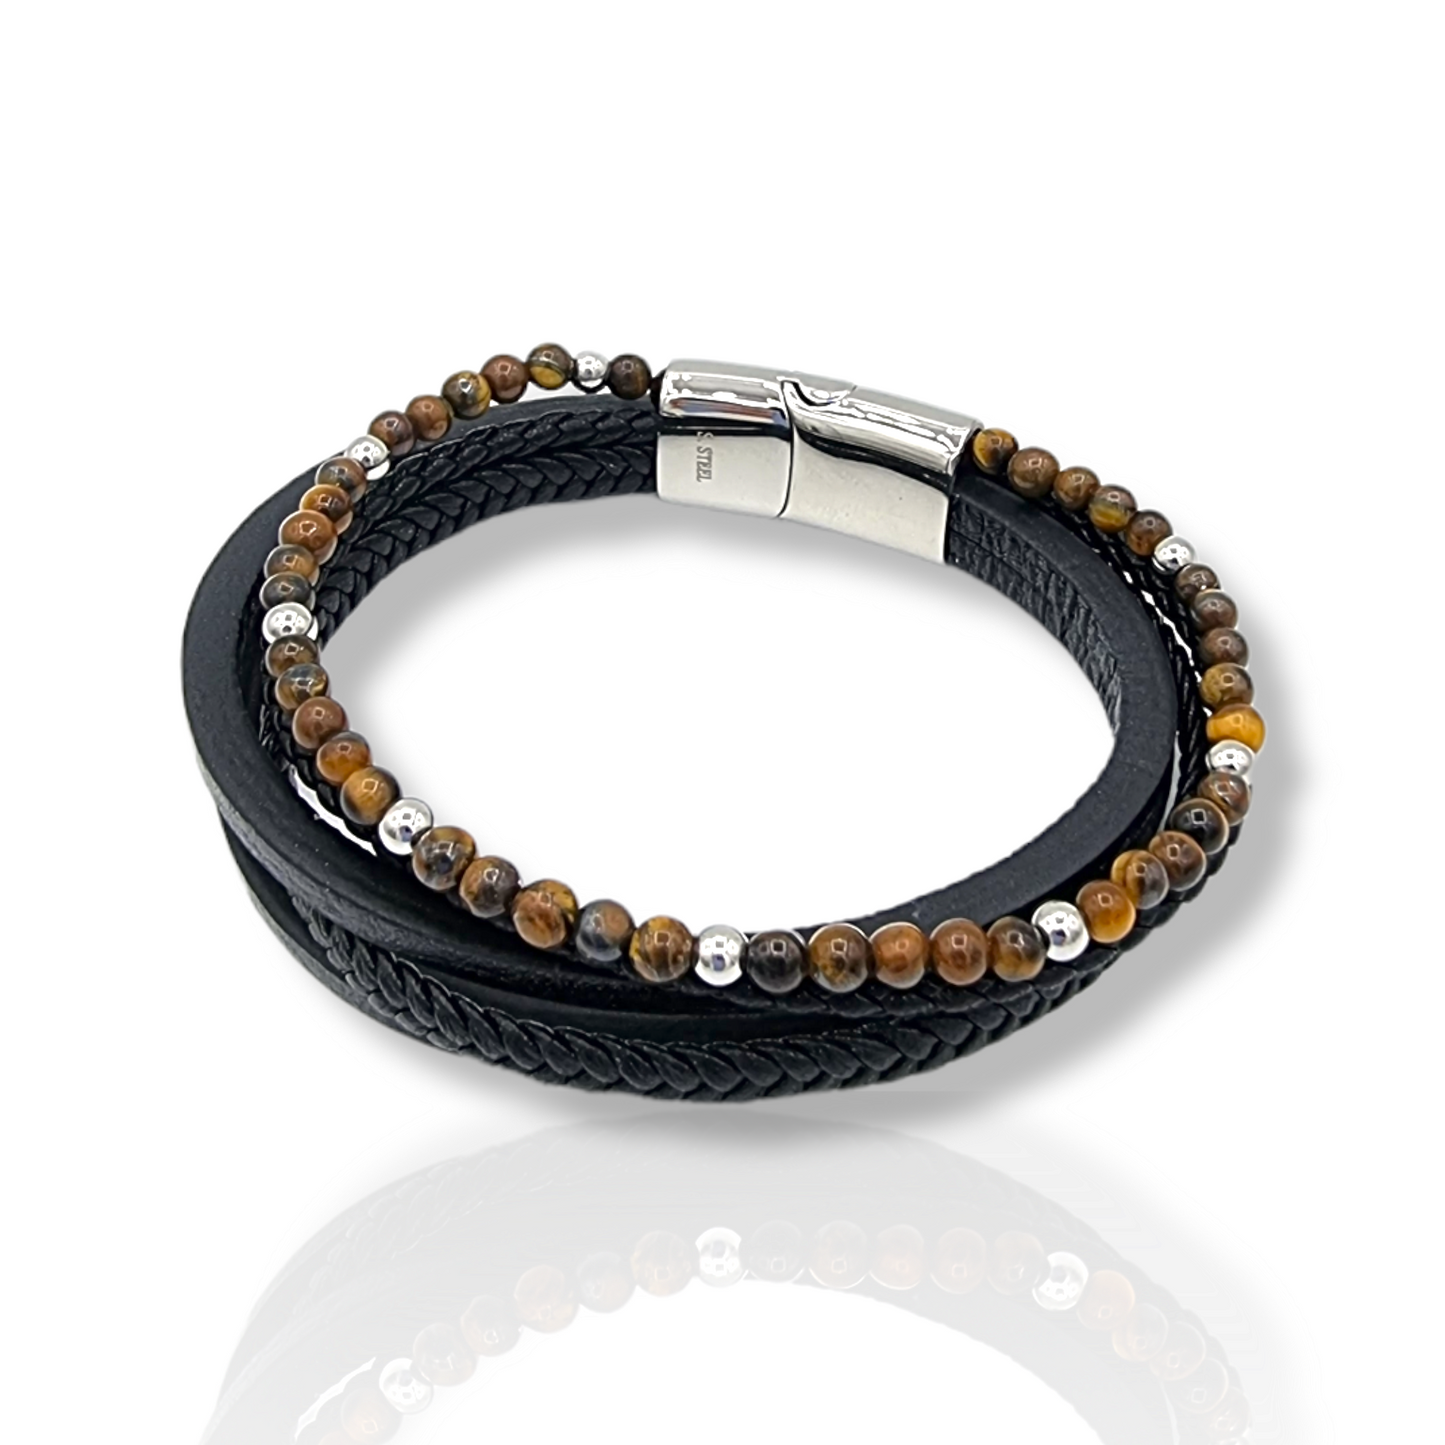 Leather Bracelet #52 (Tiger eye stones)